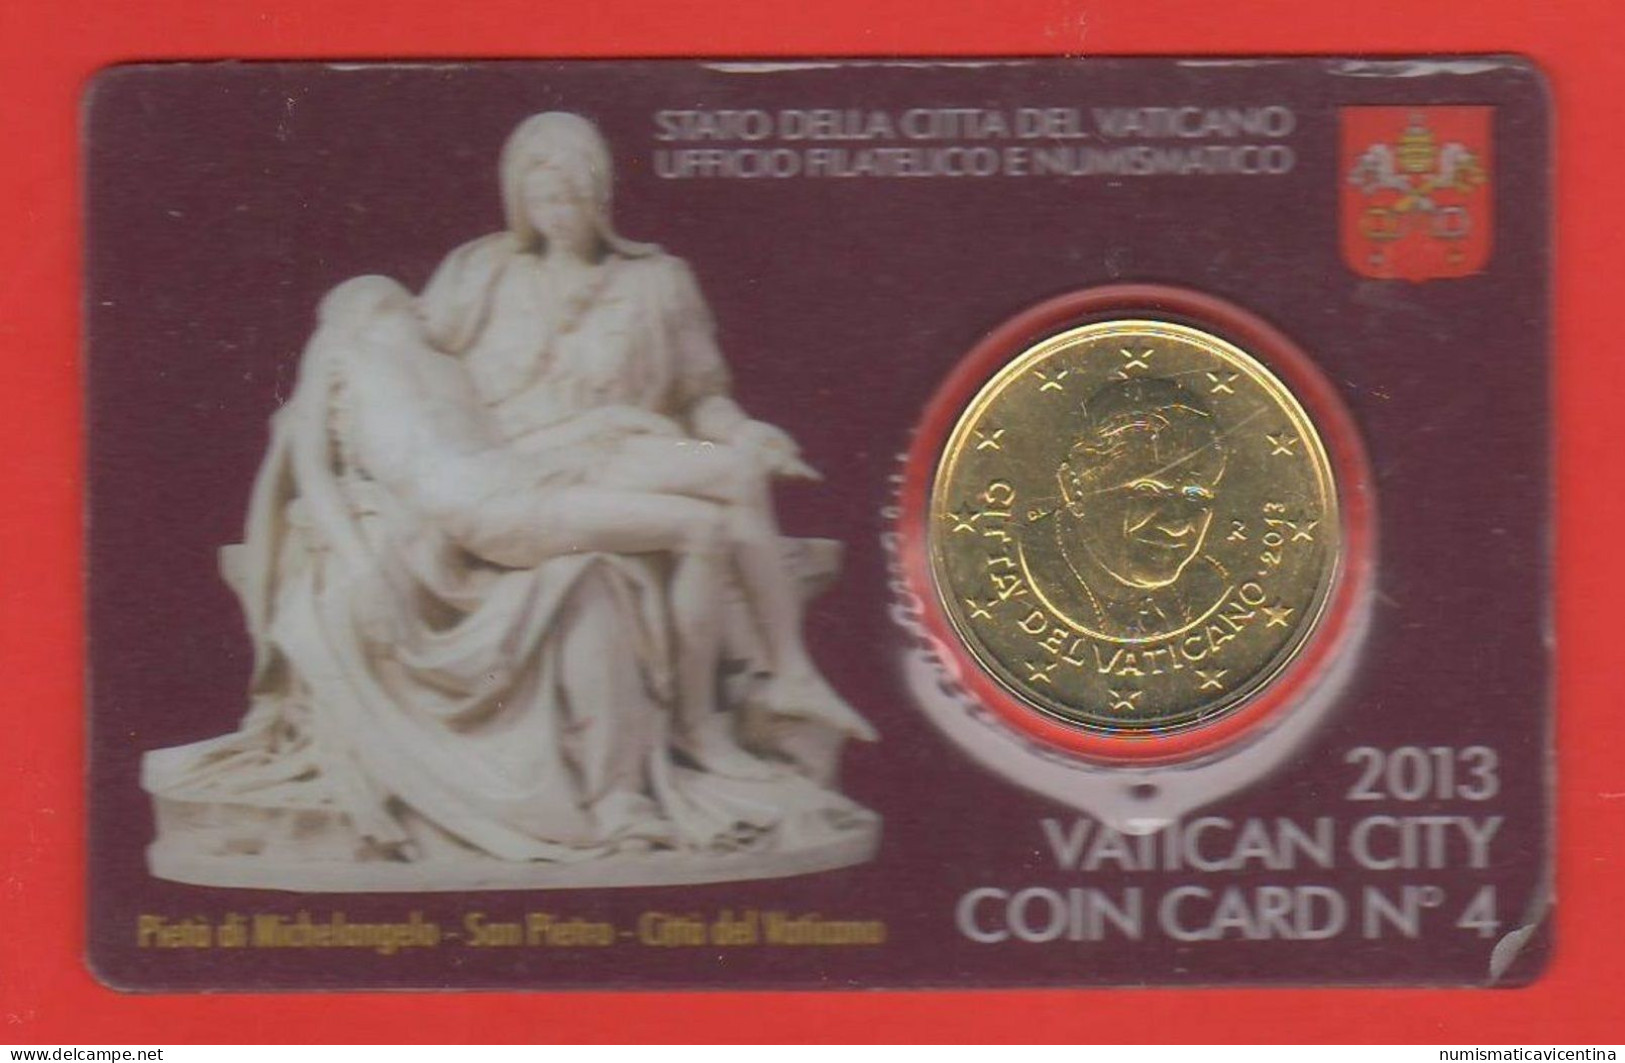 Vaticano 50 Centesimi 2013 Benedetto XVI° Coin Card N ° 4 Mint Roma 0,50 € Vatican City - Vaticaanstad